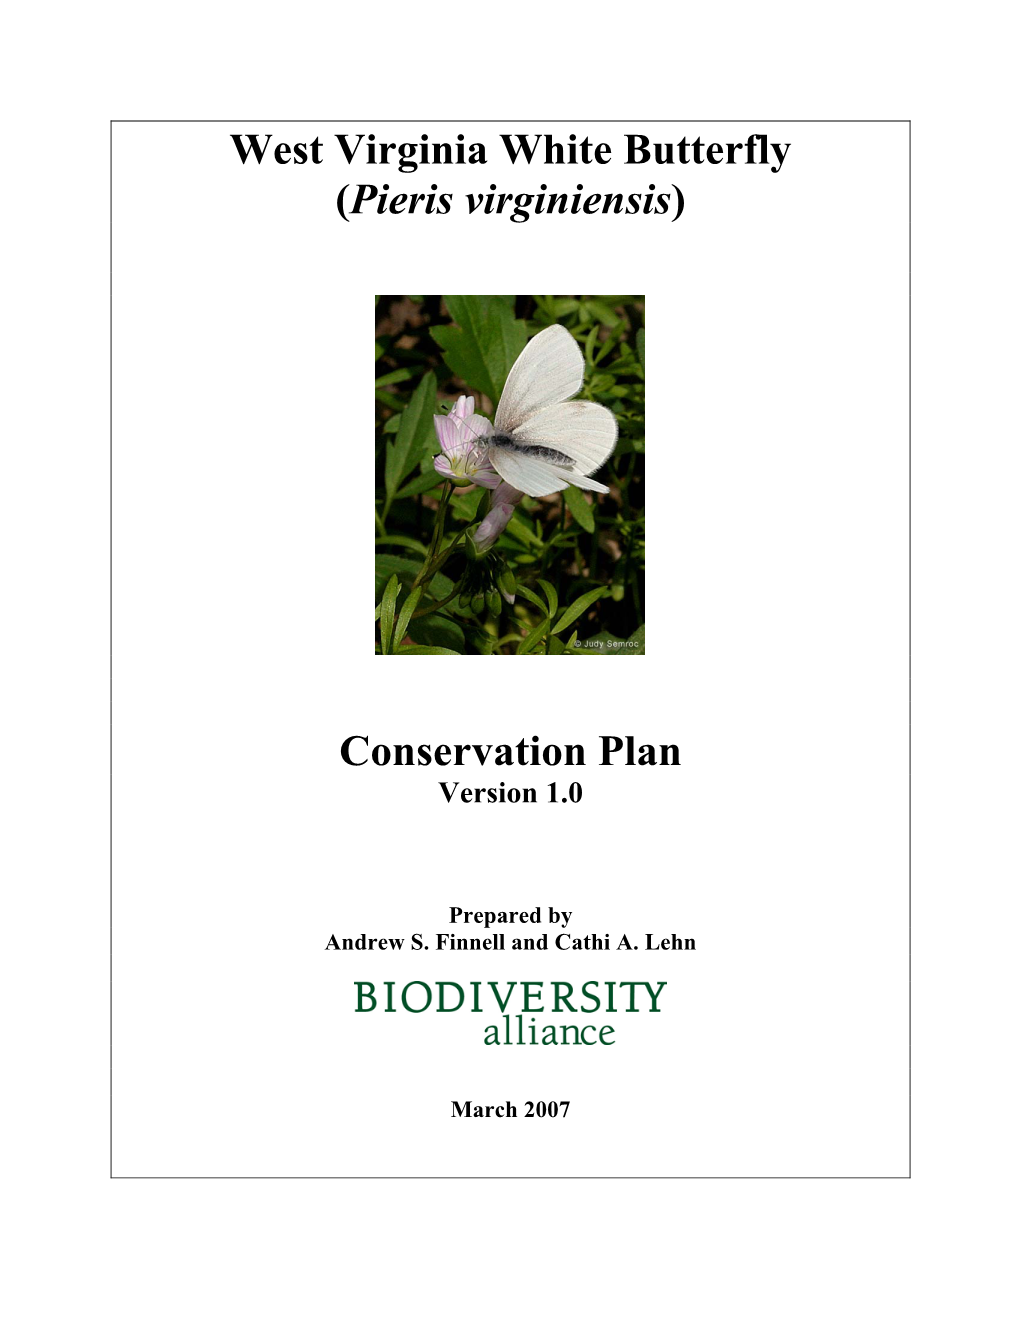 Conservation Plan Version 1.0